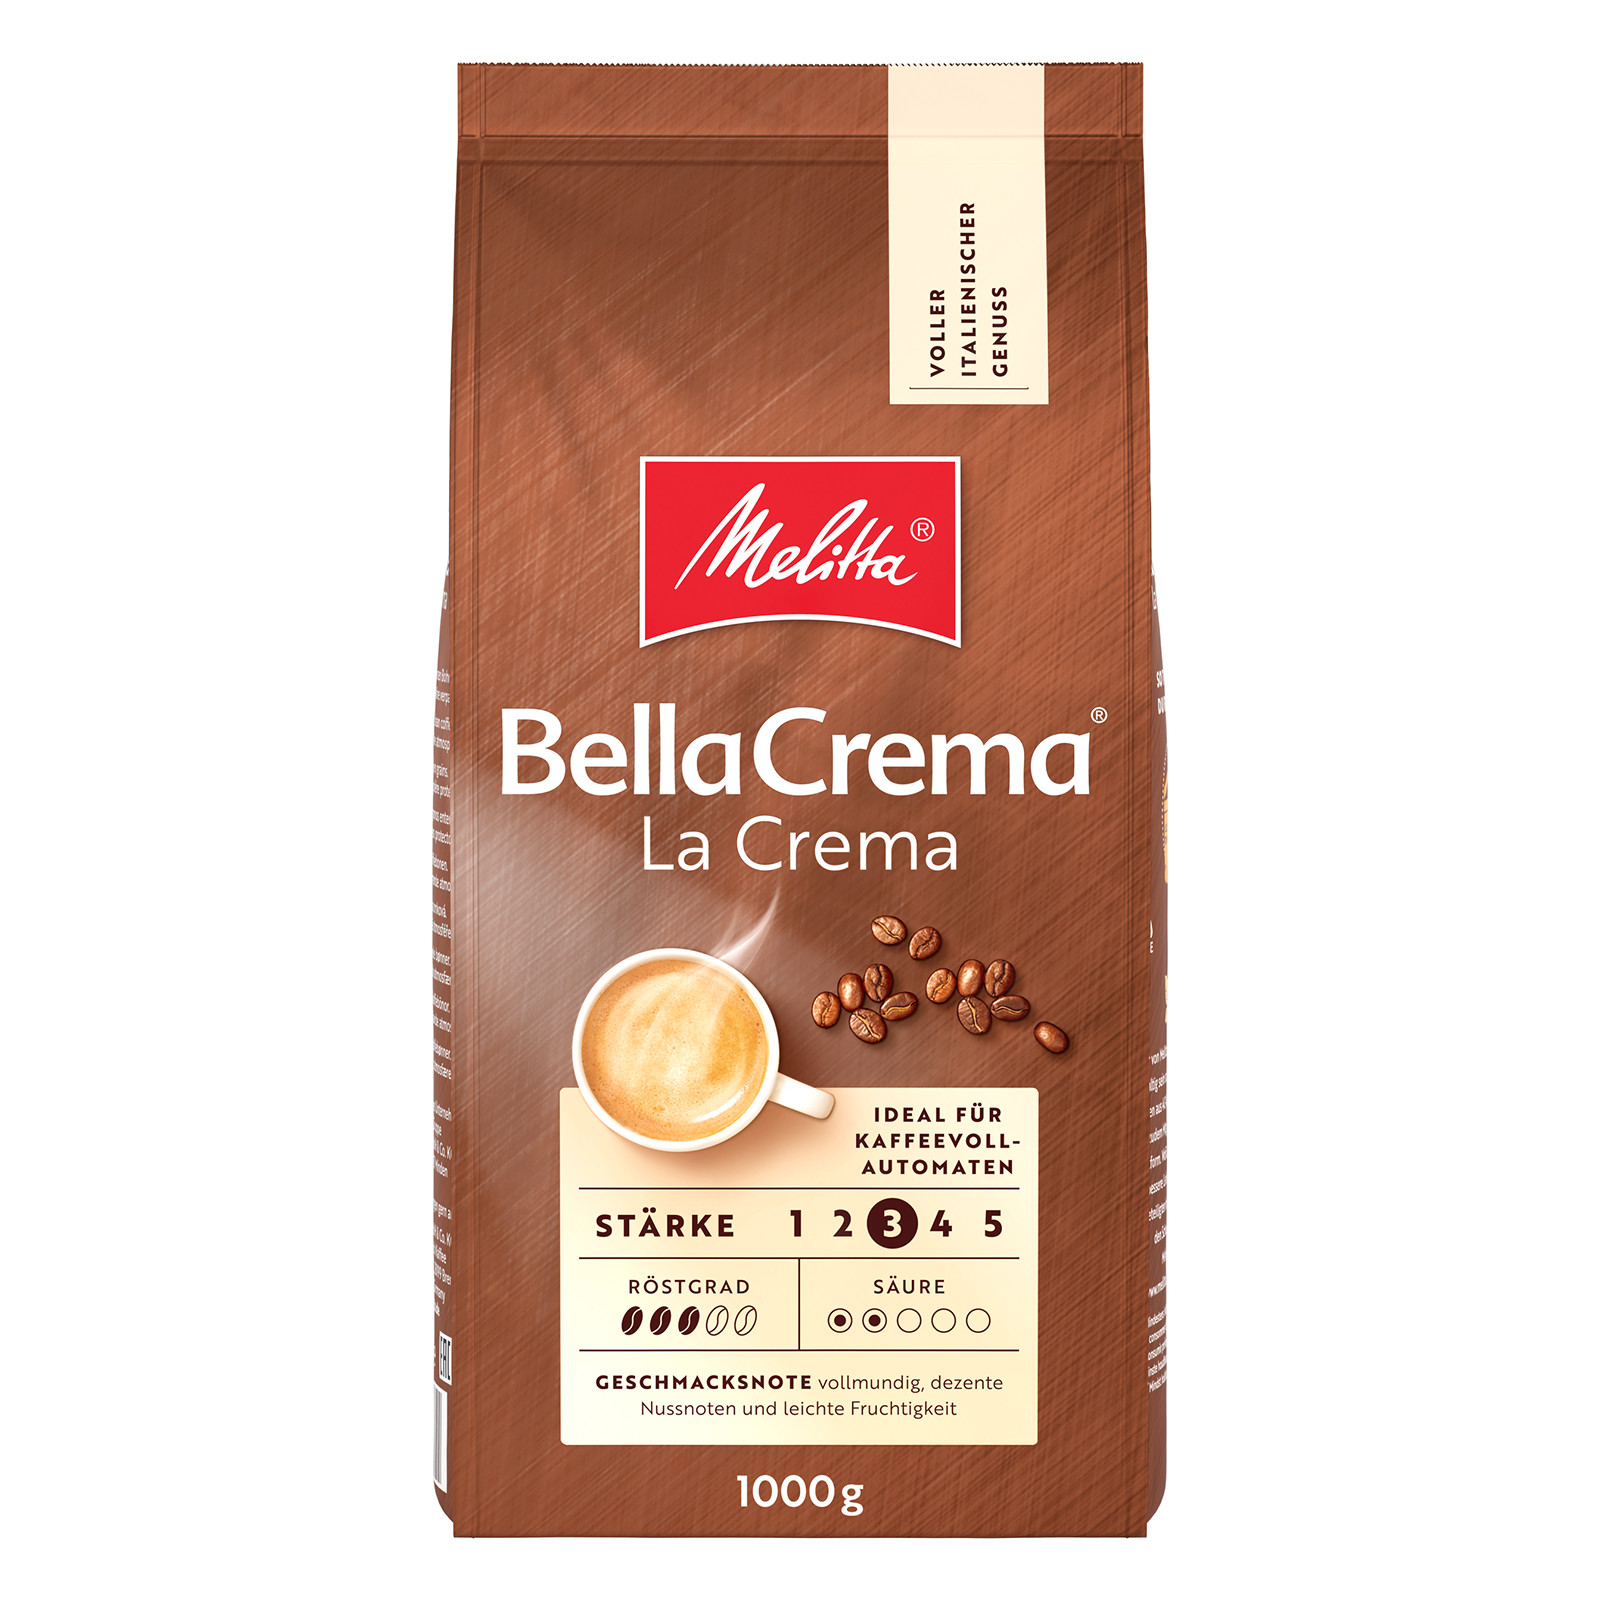 MELITTA Probierset 4x1kg Kaffeebohnen BellaCrema